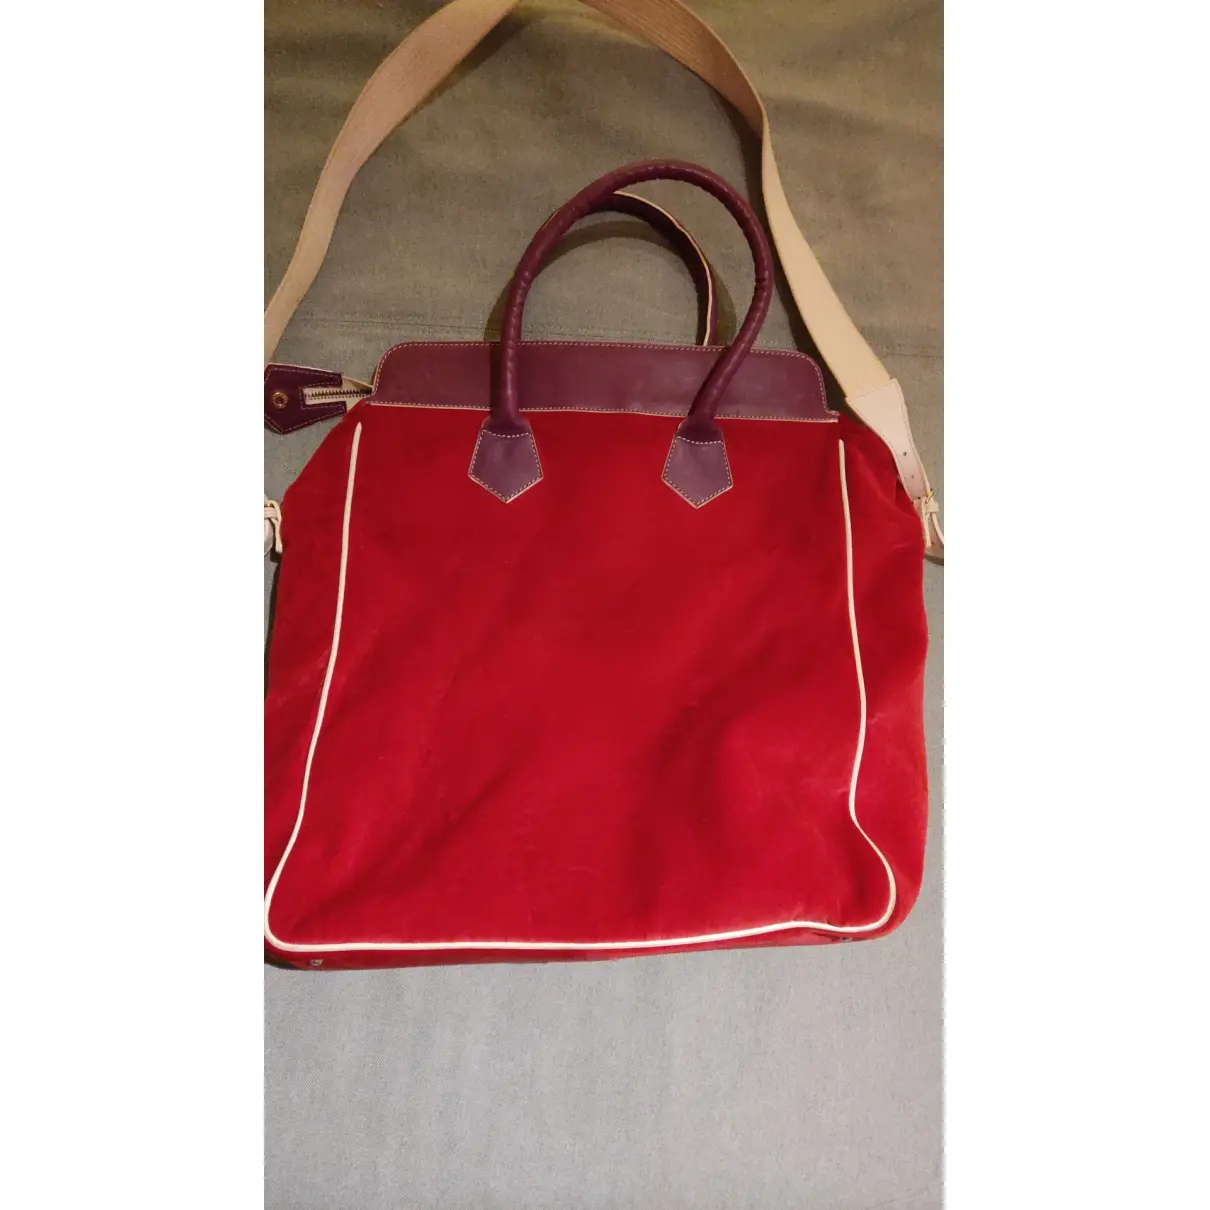 Buy Pierre-Louis Mascia Velvet handbag online